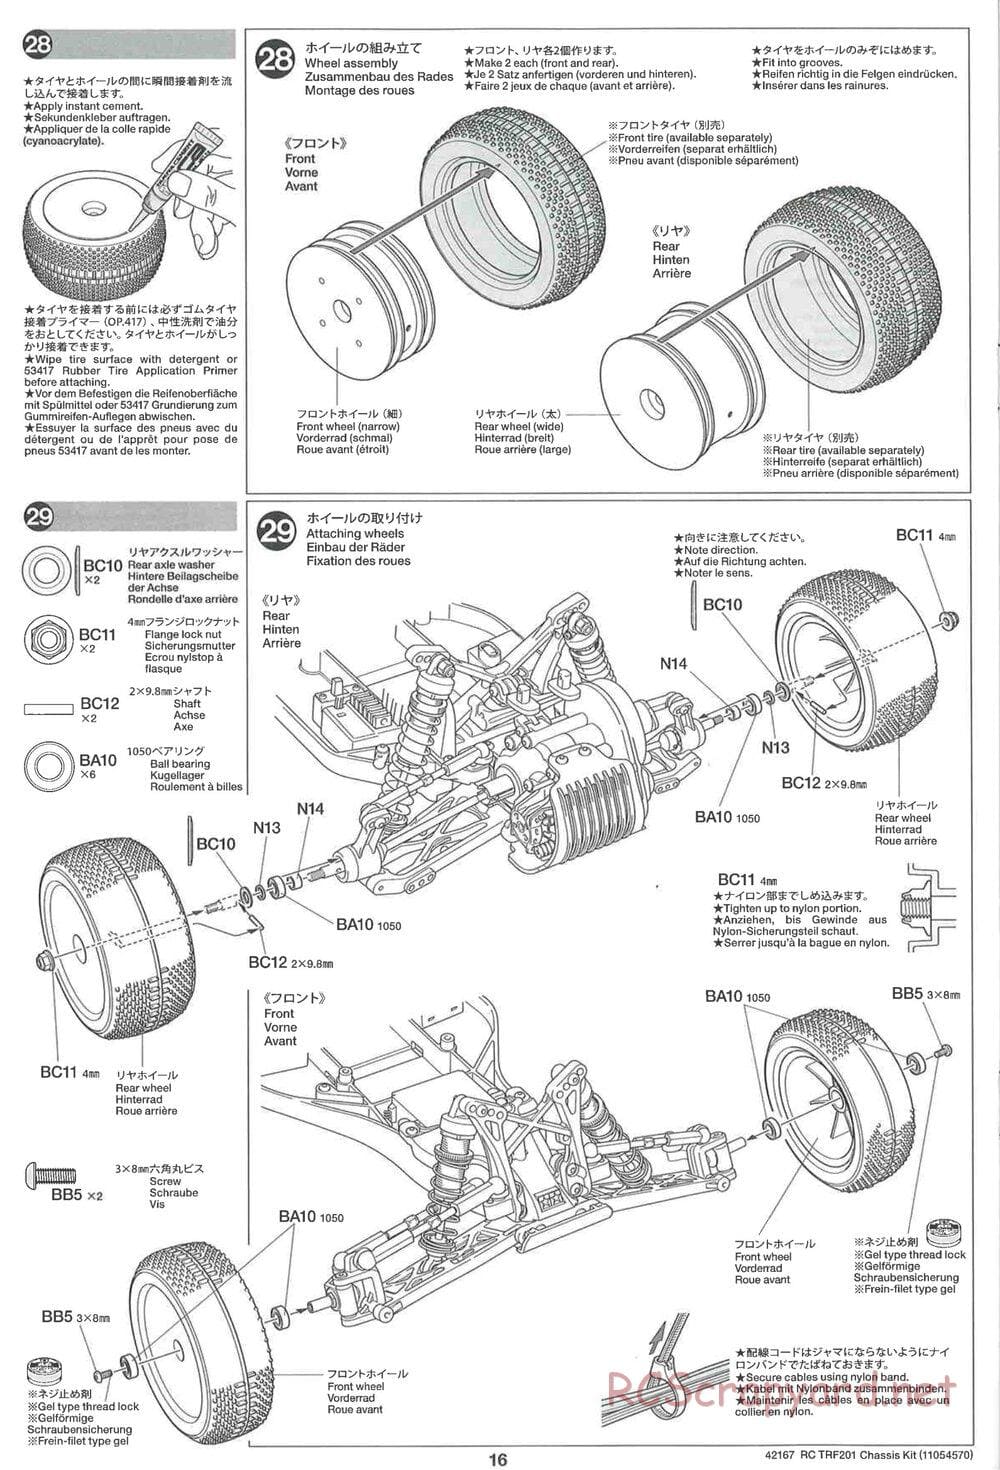 Tamiya - TRF201 Chassis - Manual - Page 16